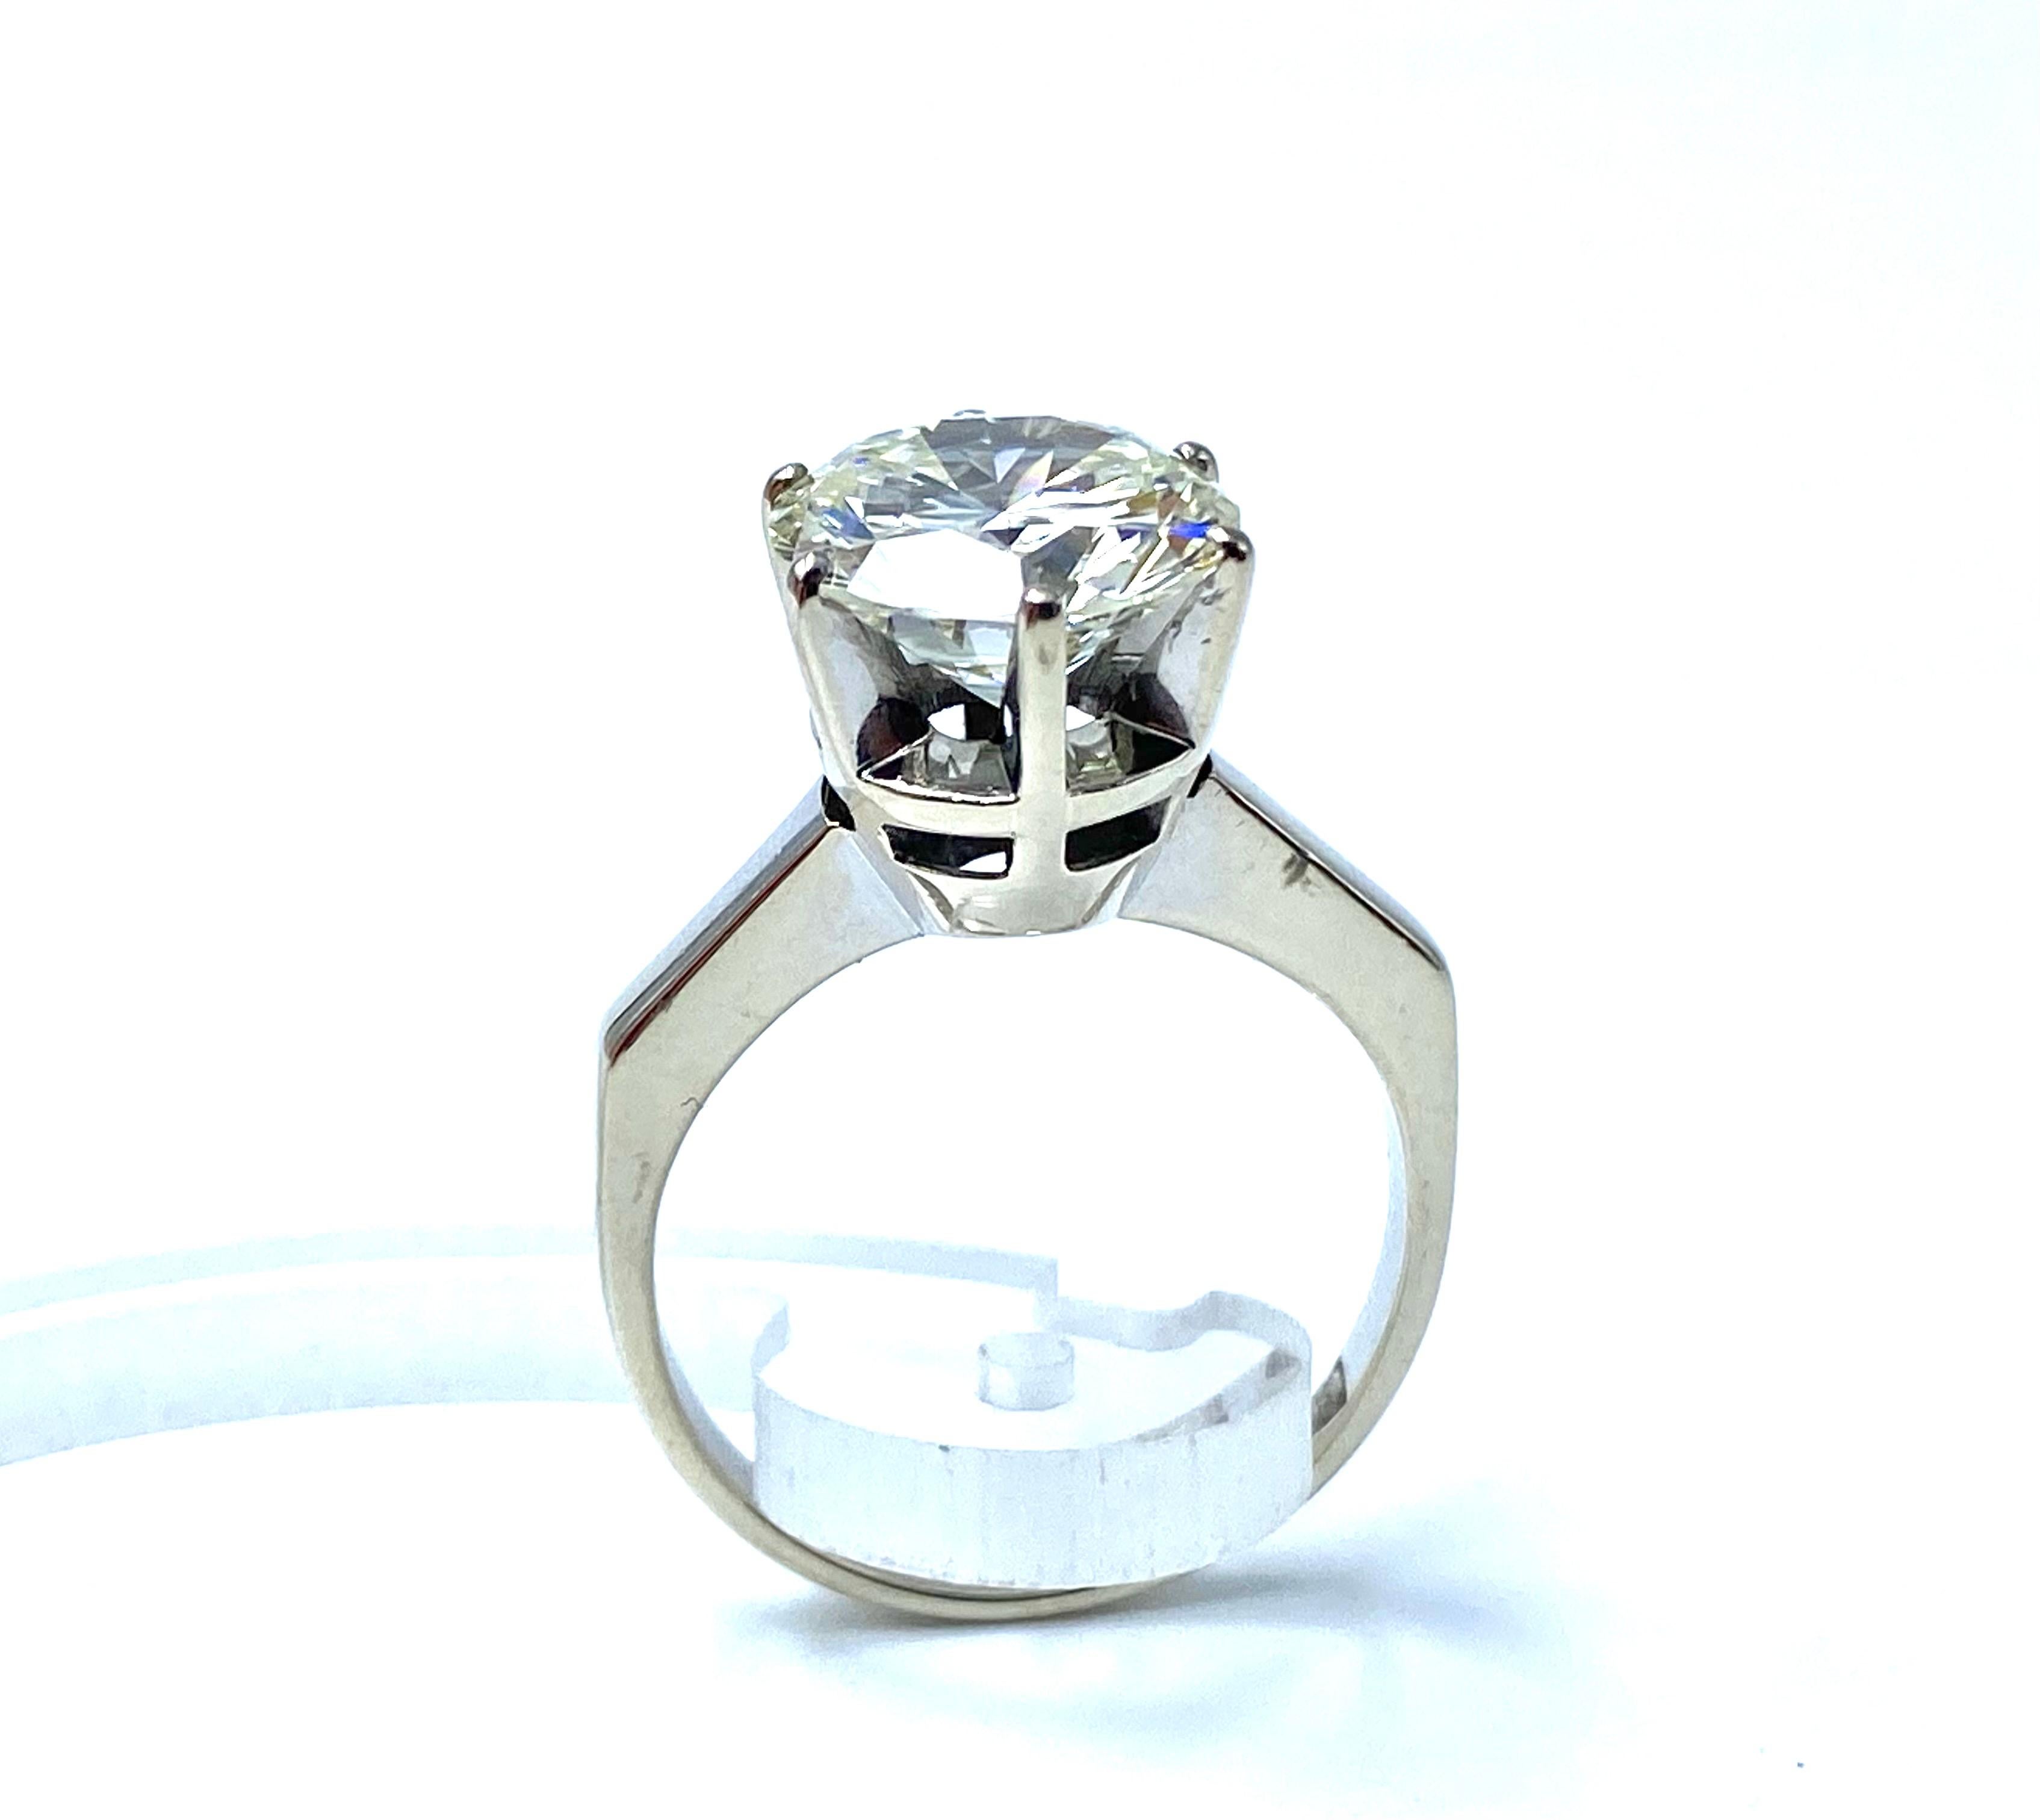 Brilliant Cut Amazing Diamond Engagement Ring For Sale